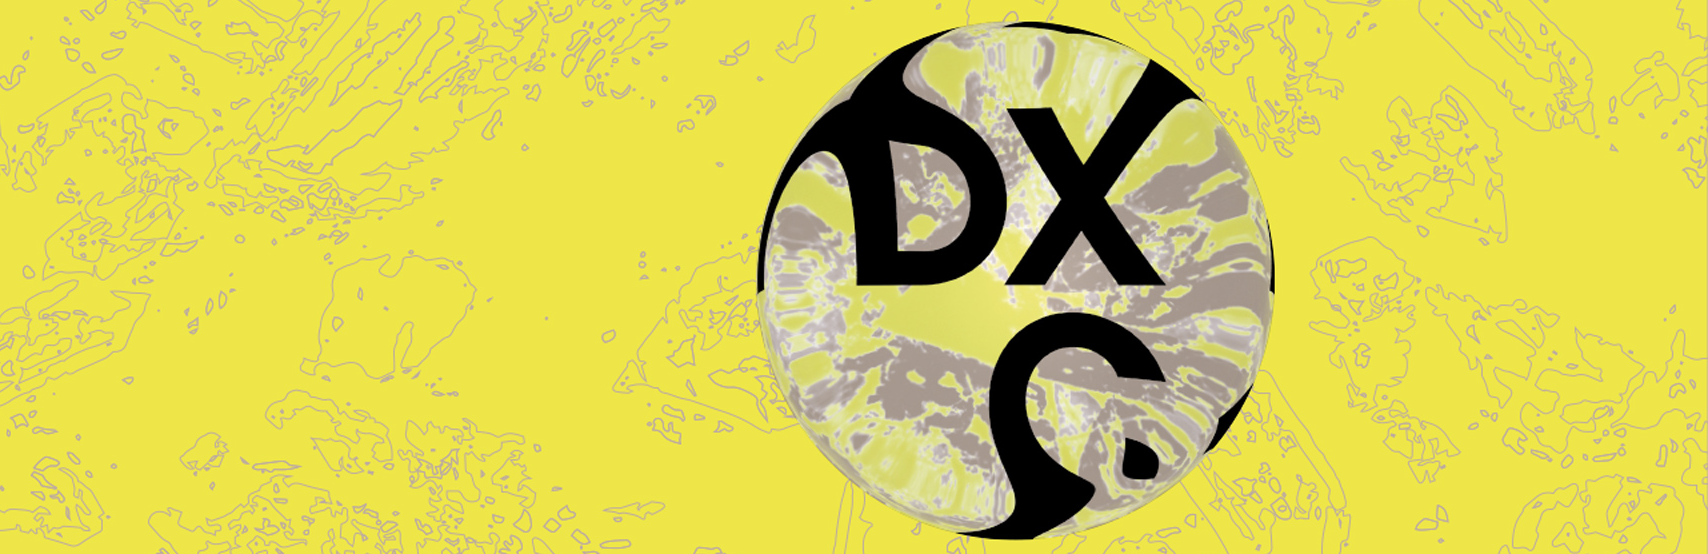 DesignX Commons - Lauree Magistrali IED